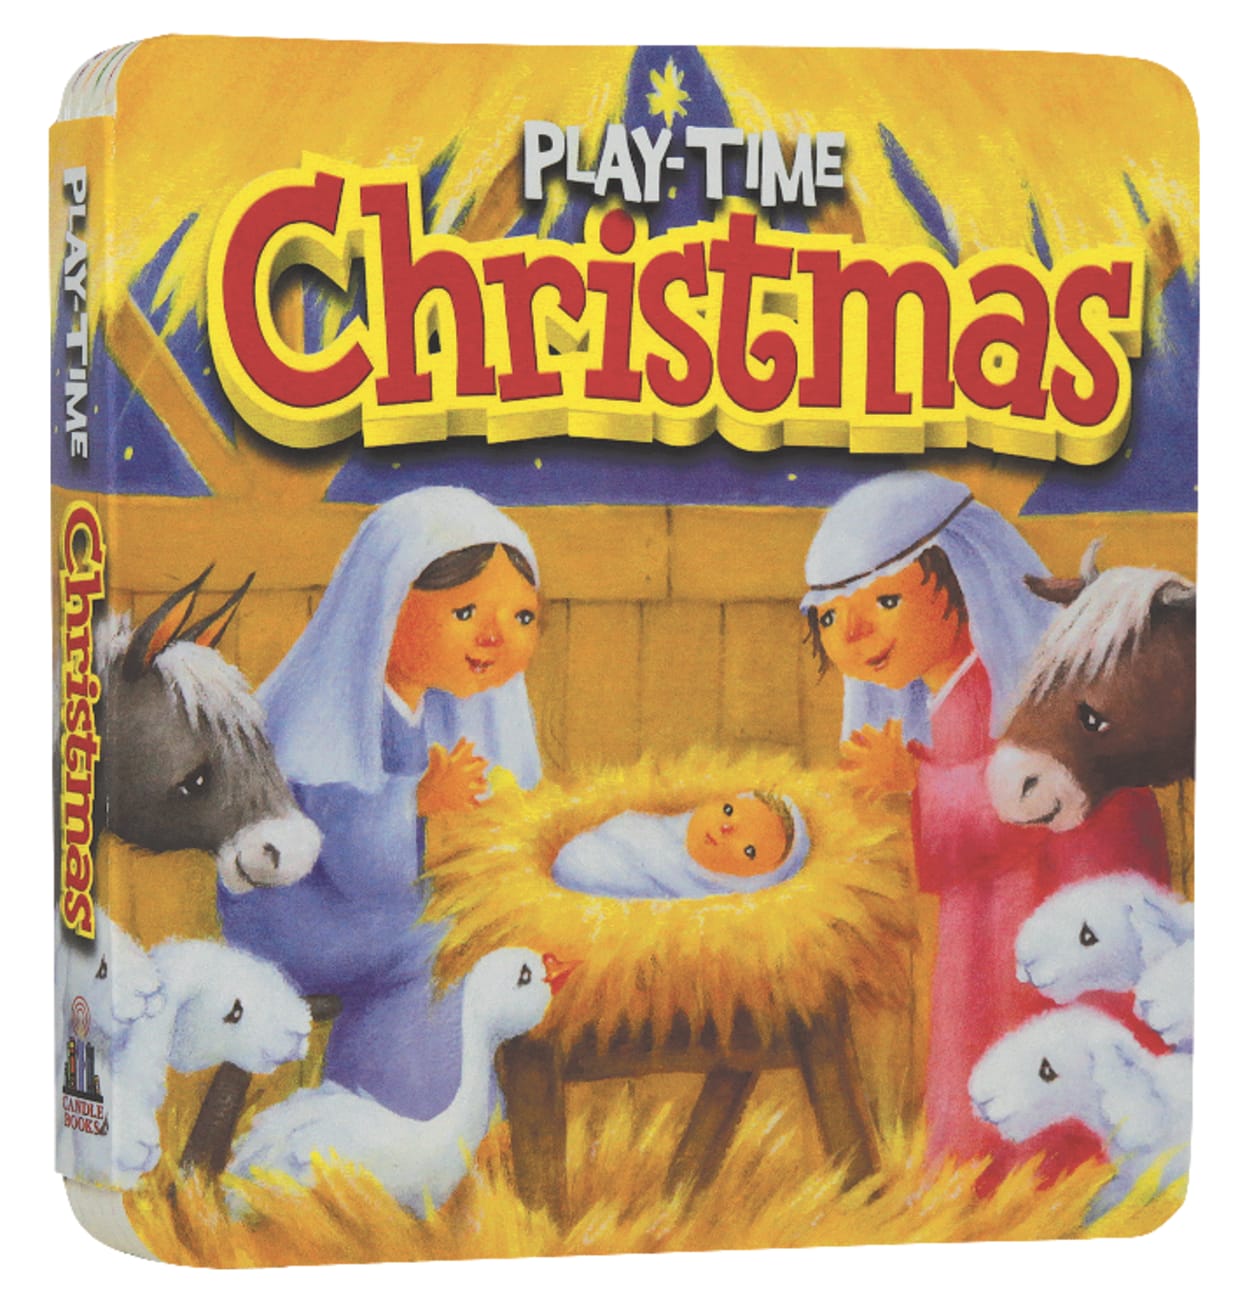 Play-Time Christmas Board Book